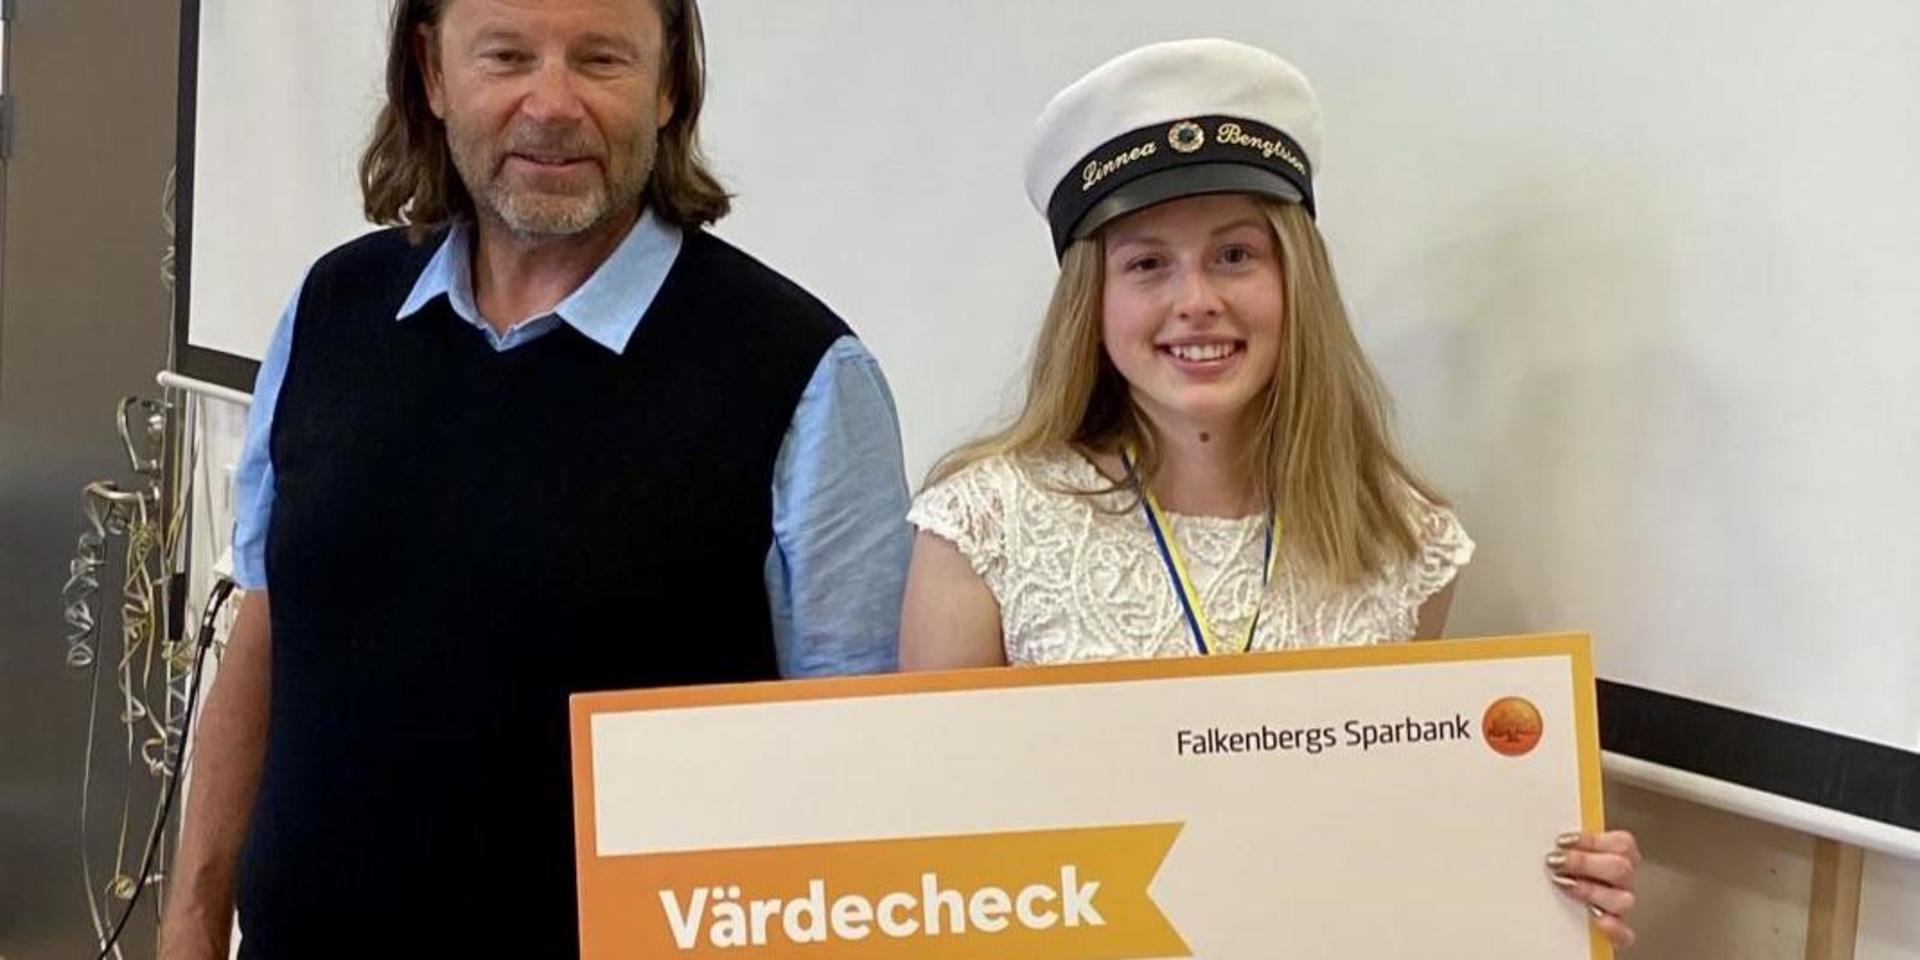 Linnea Bengtsson tilldelades Falkenbergs sparkbanks stipendium för bästa gymnasiearbete. Michael Zakrisson delade ut stipendiet. 